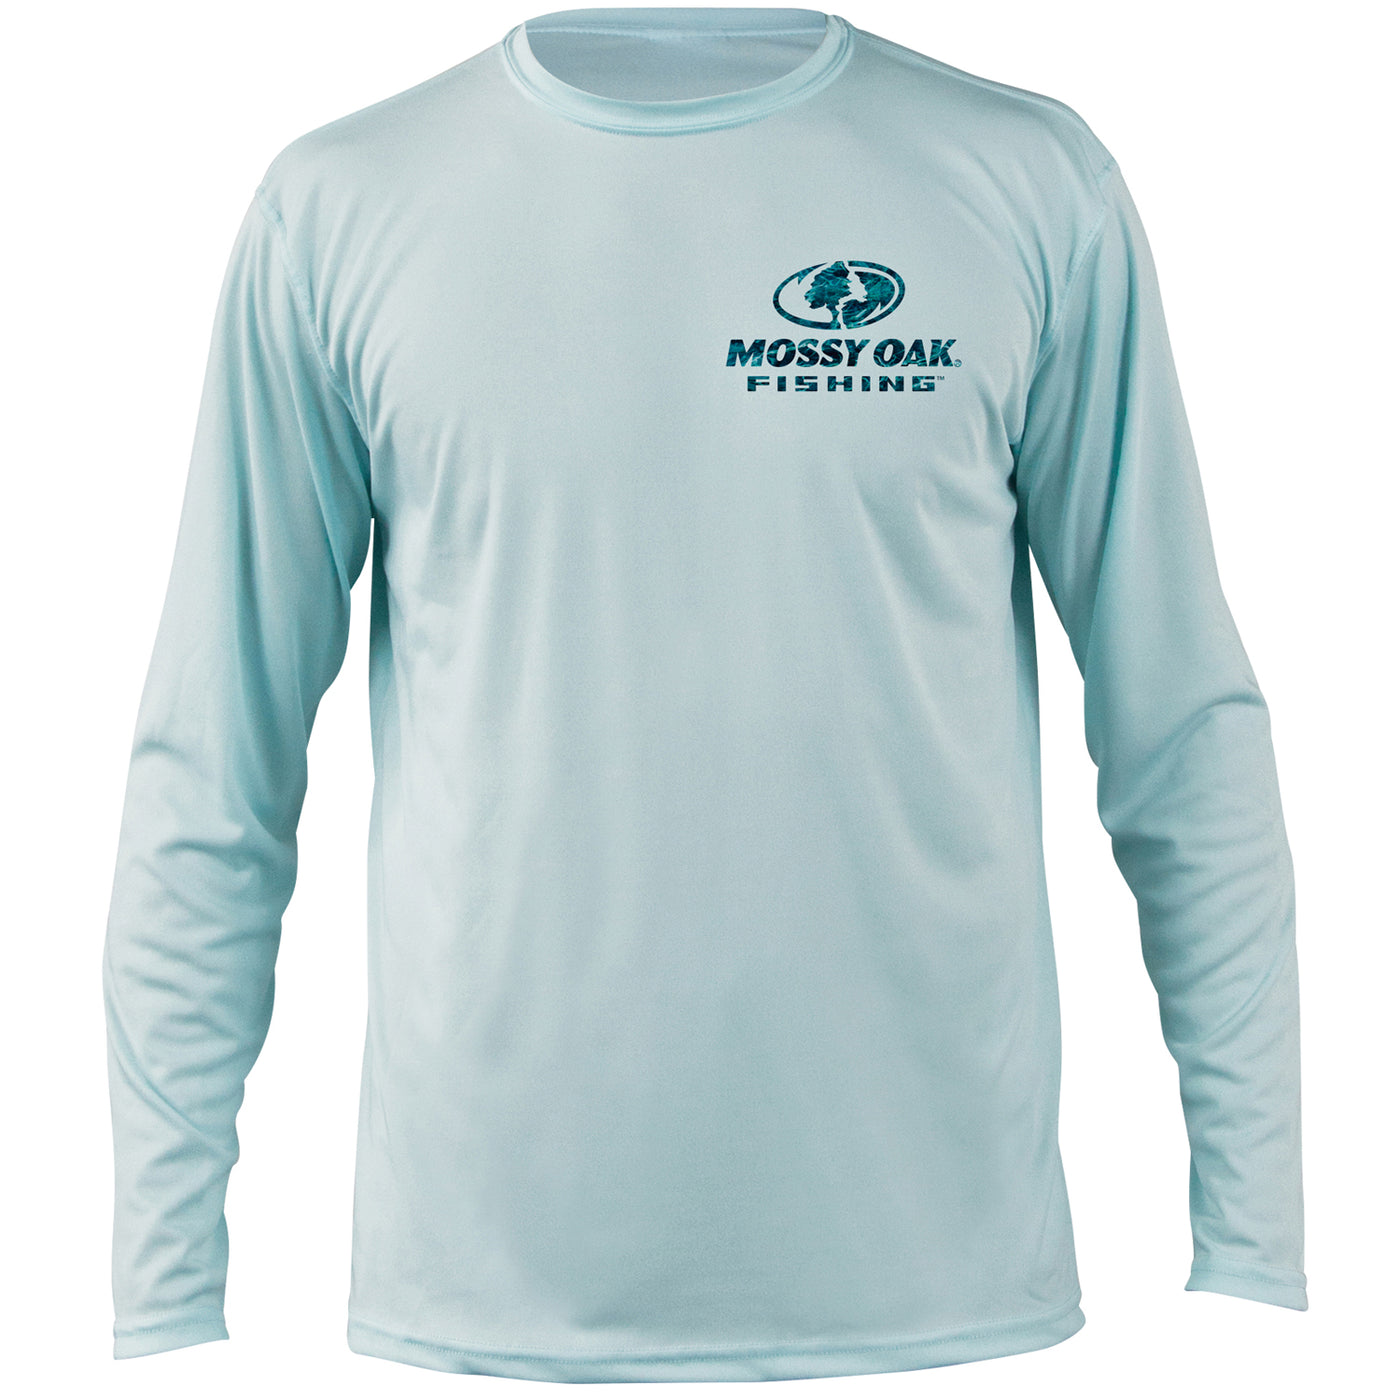 Mossy Oak Fishing Elements Logo Long Sleeve Shirt – The Mossy Oak